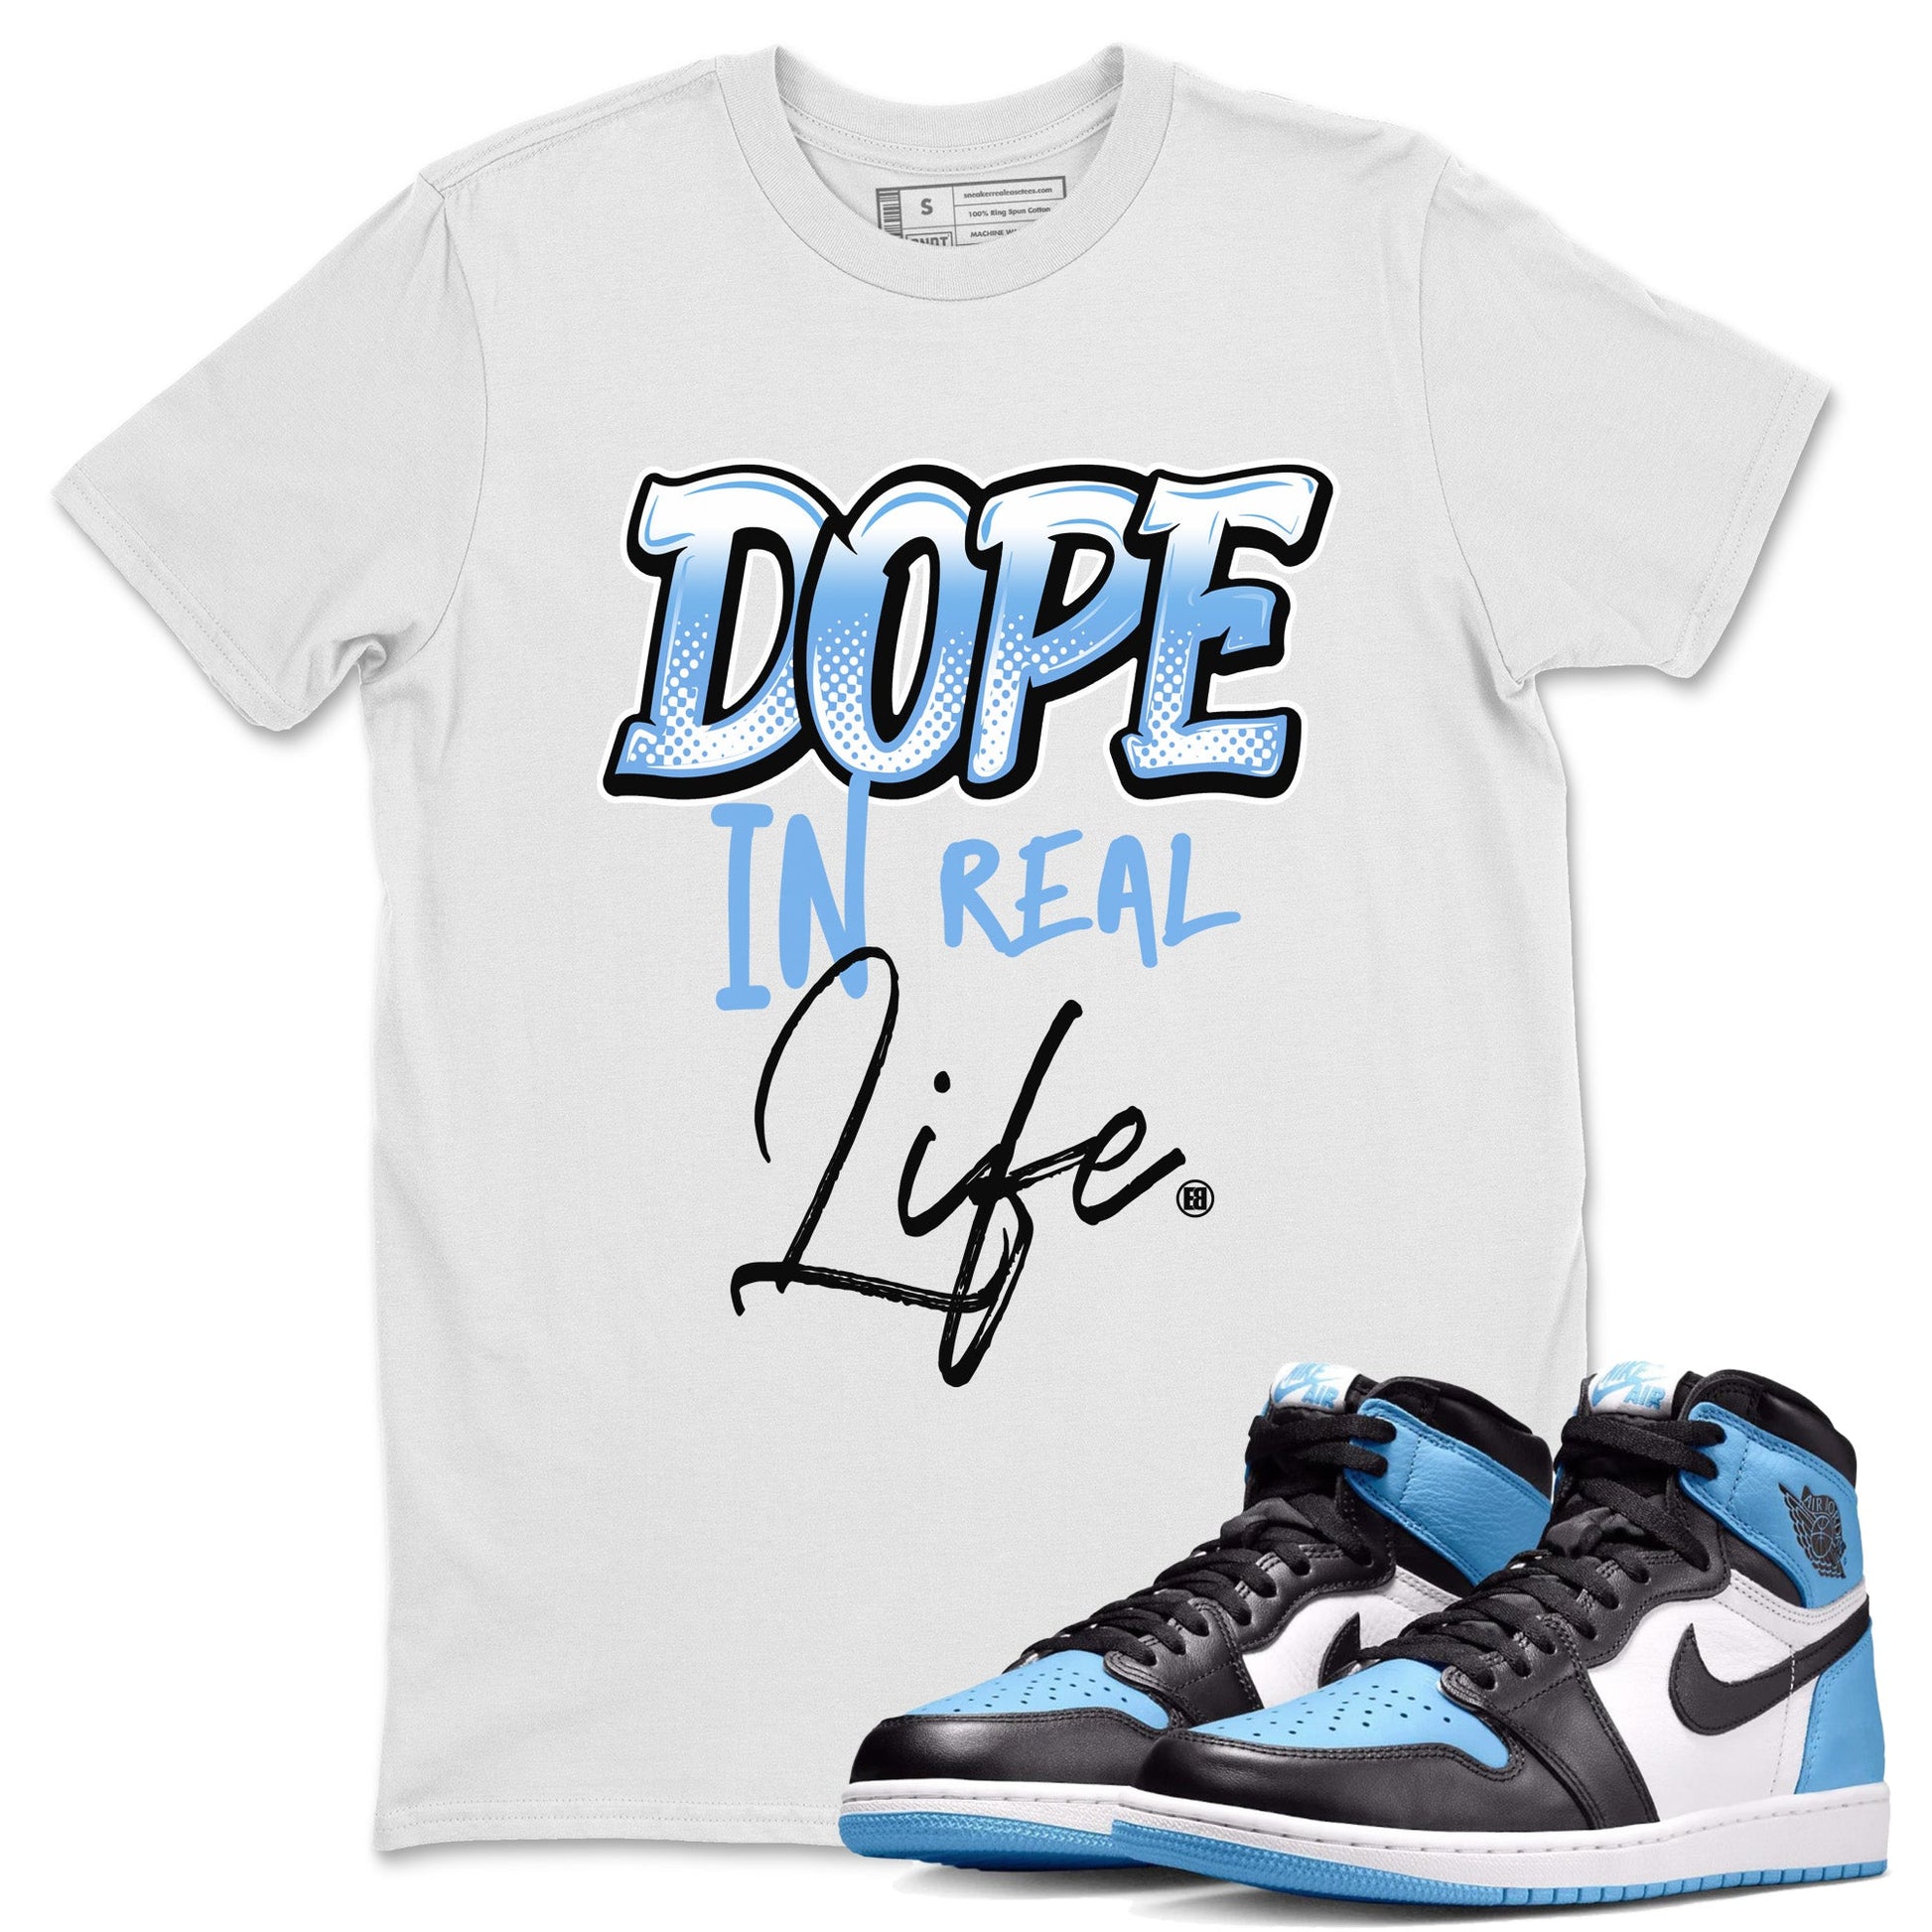 Air Jordan 1 Retro High OG UNC Toe Shirt to match Jordans Dope In Real Life Sneaker Tees Air Jordan 1 High OG UNC Toe SNRT Sneaker Release Tees Crew Neck T-Shirts White 1